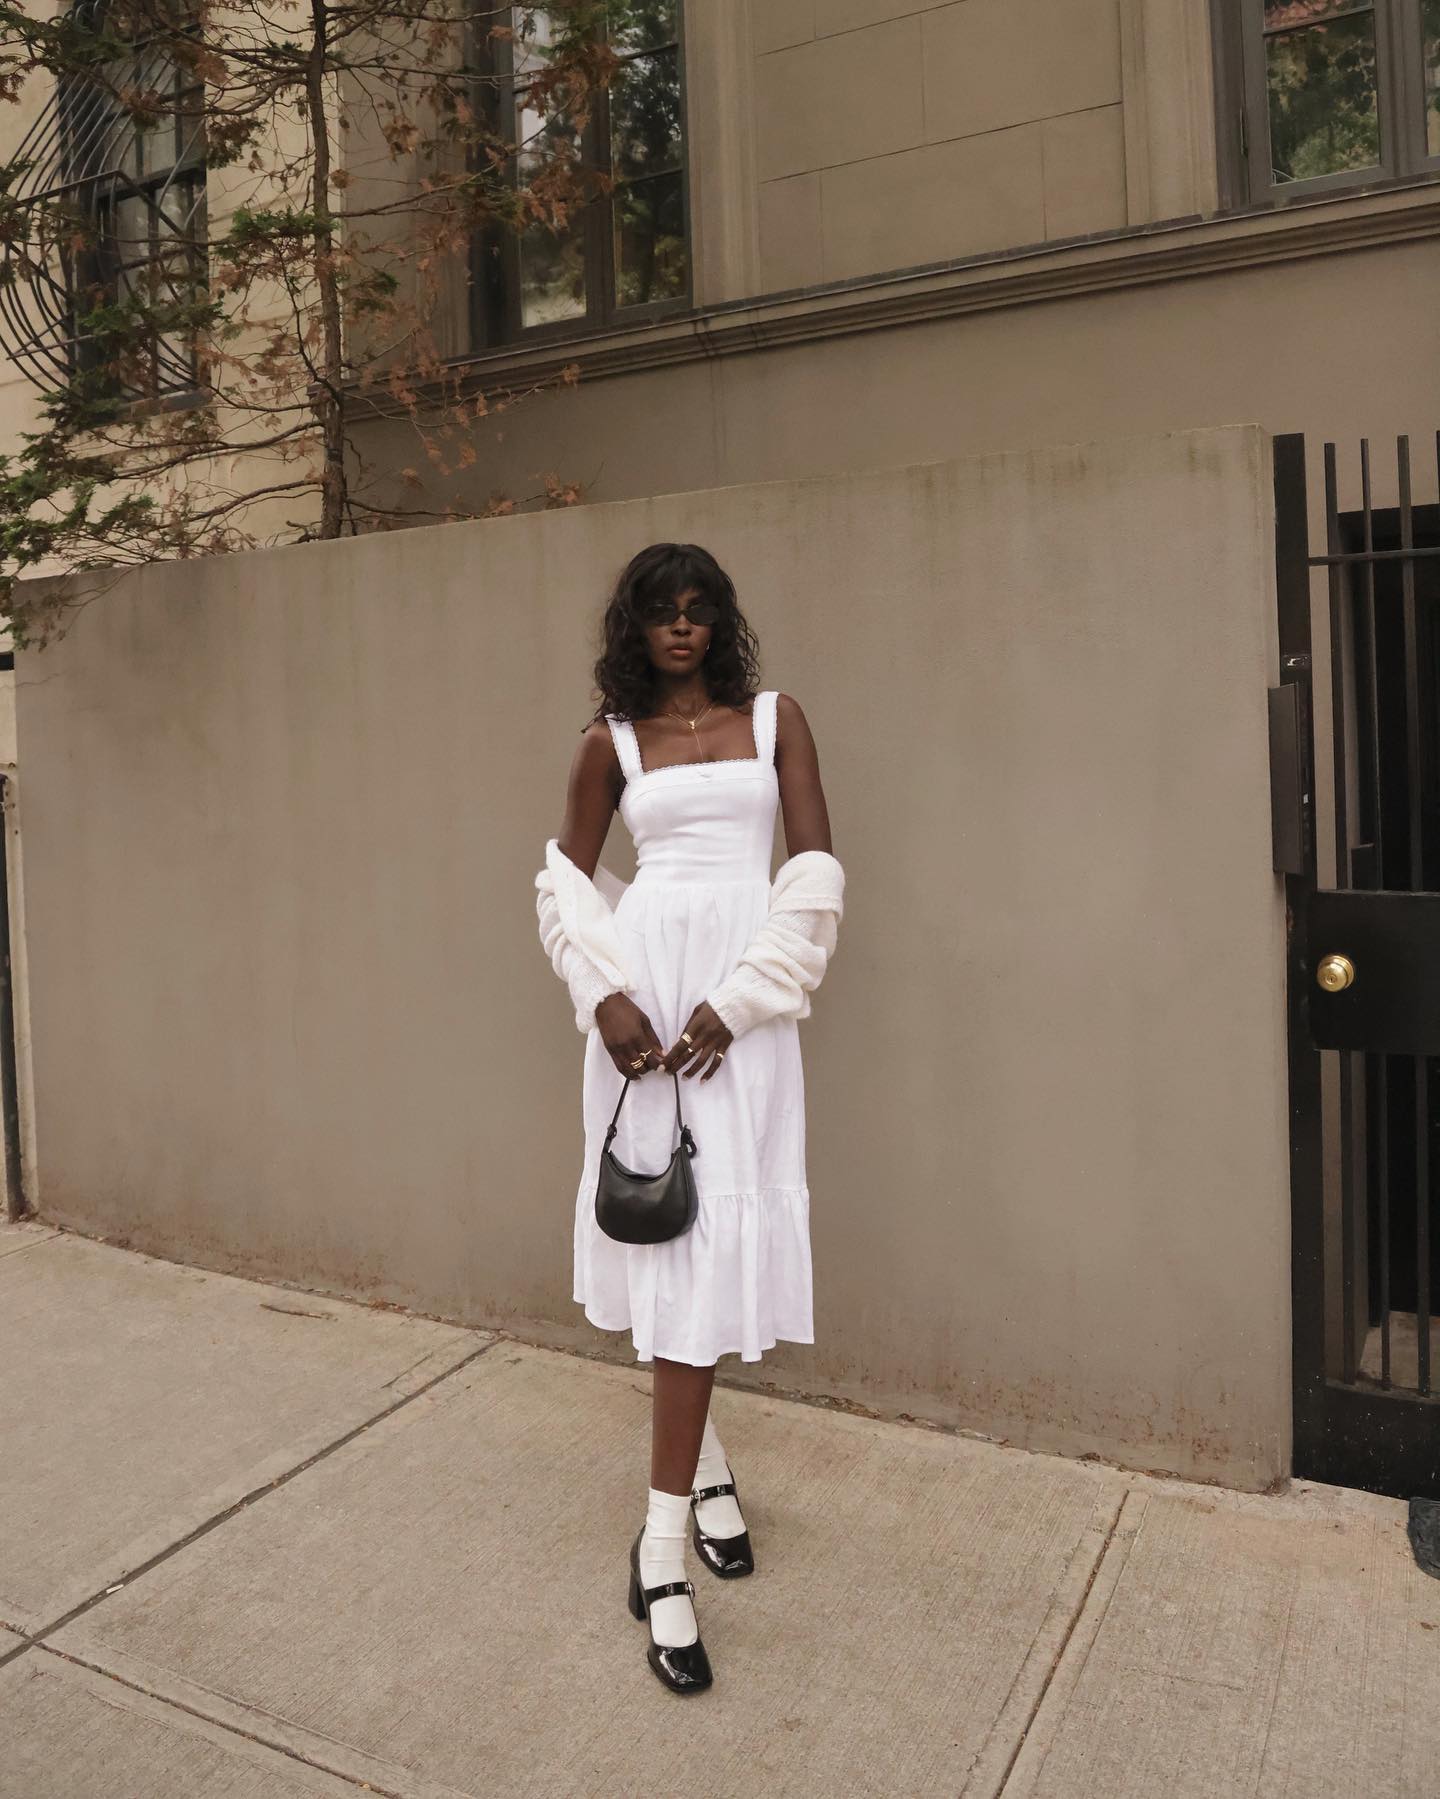 Woman on street wears white dress, white cardigan, white socks, black shoes